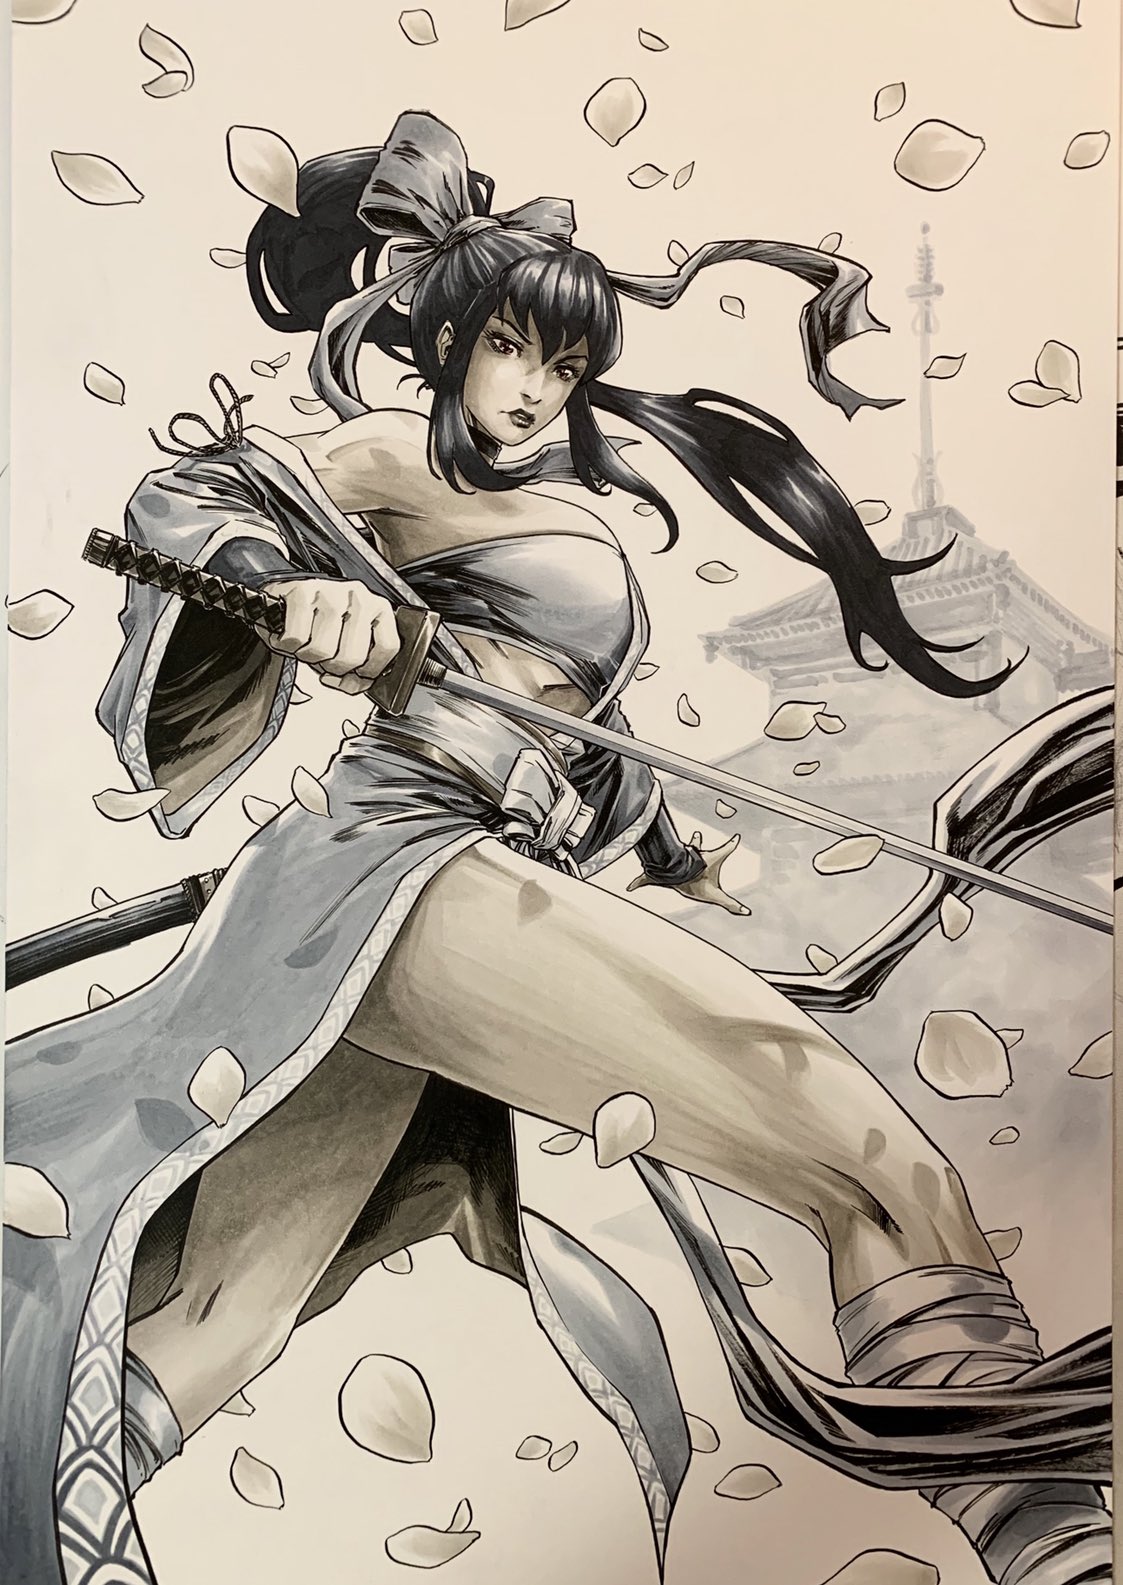 samurai anime girl by RicoHS on DeviantArt